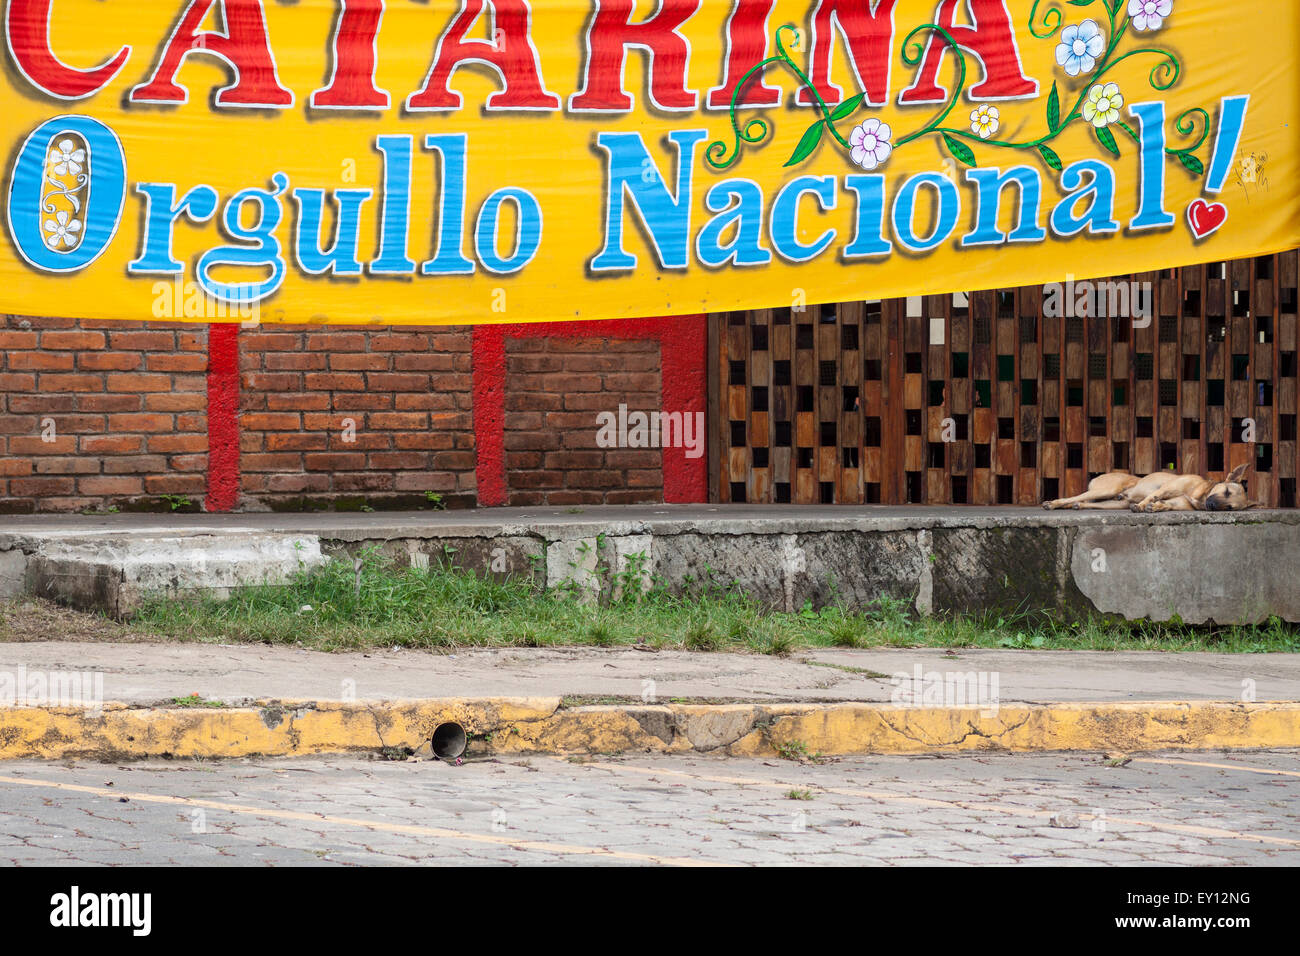 Street dog sleeping under Catarina National Pride banner, Nicaragua Stock Photo